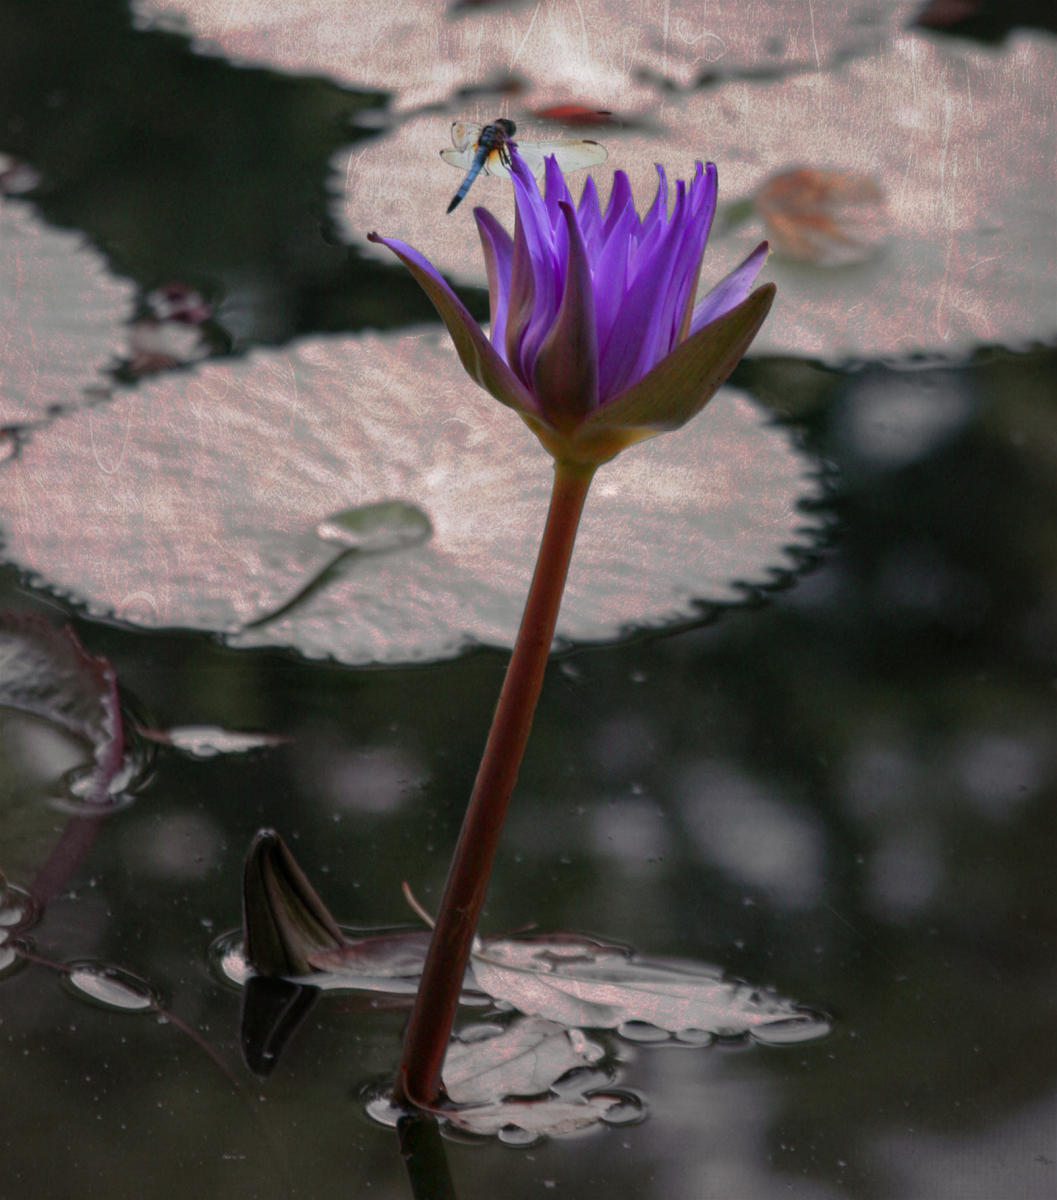 Lotus Flower. Central Park, New York.
Ellin Pollachek Tree & Nature Photography